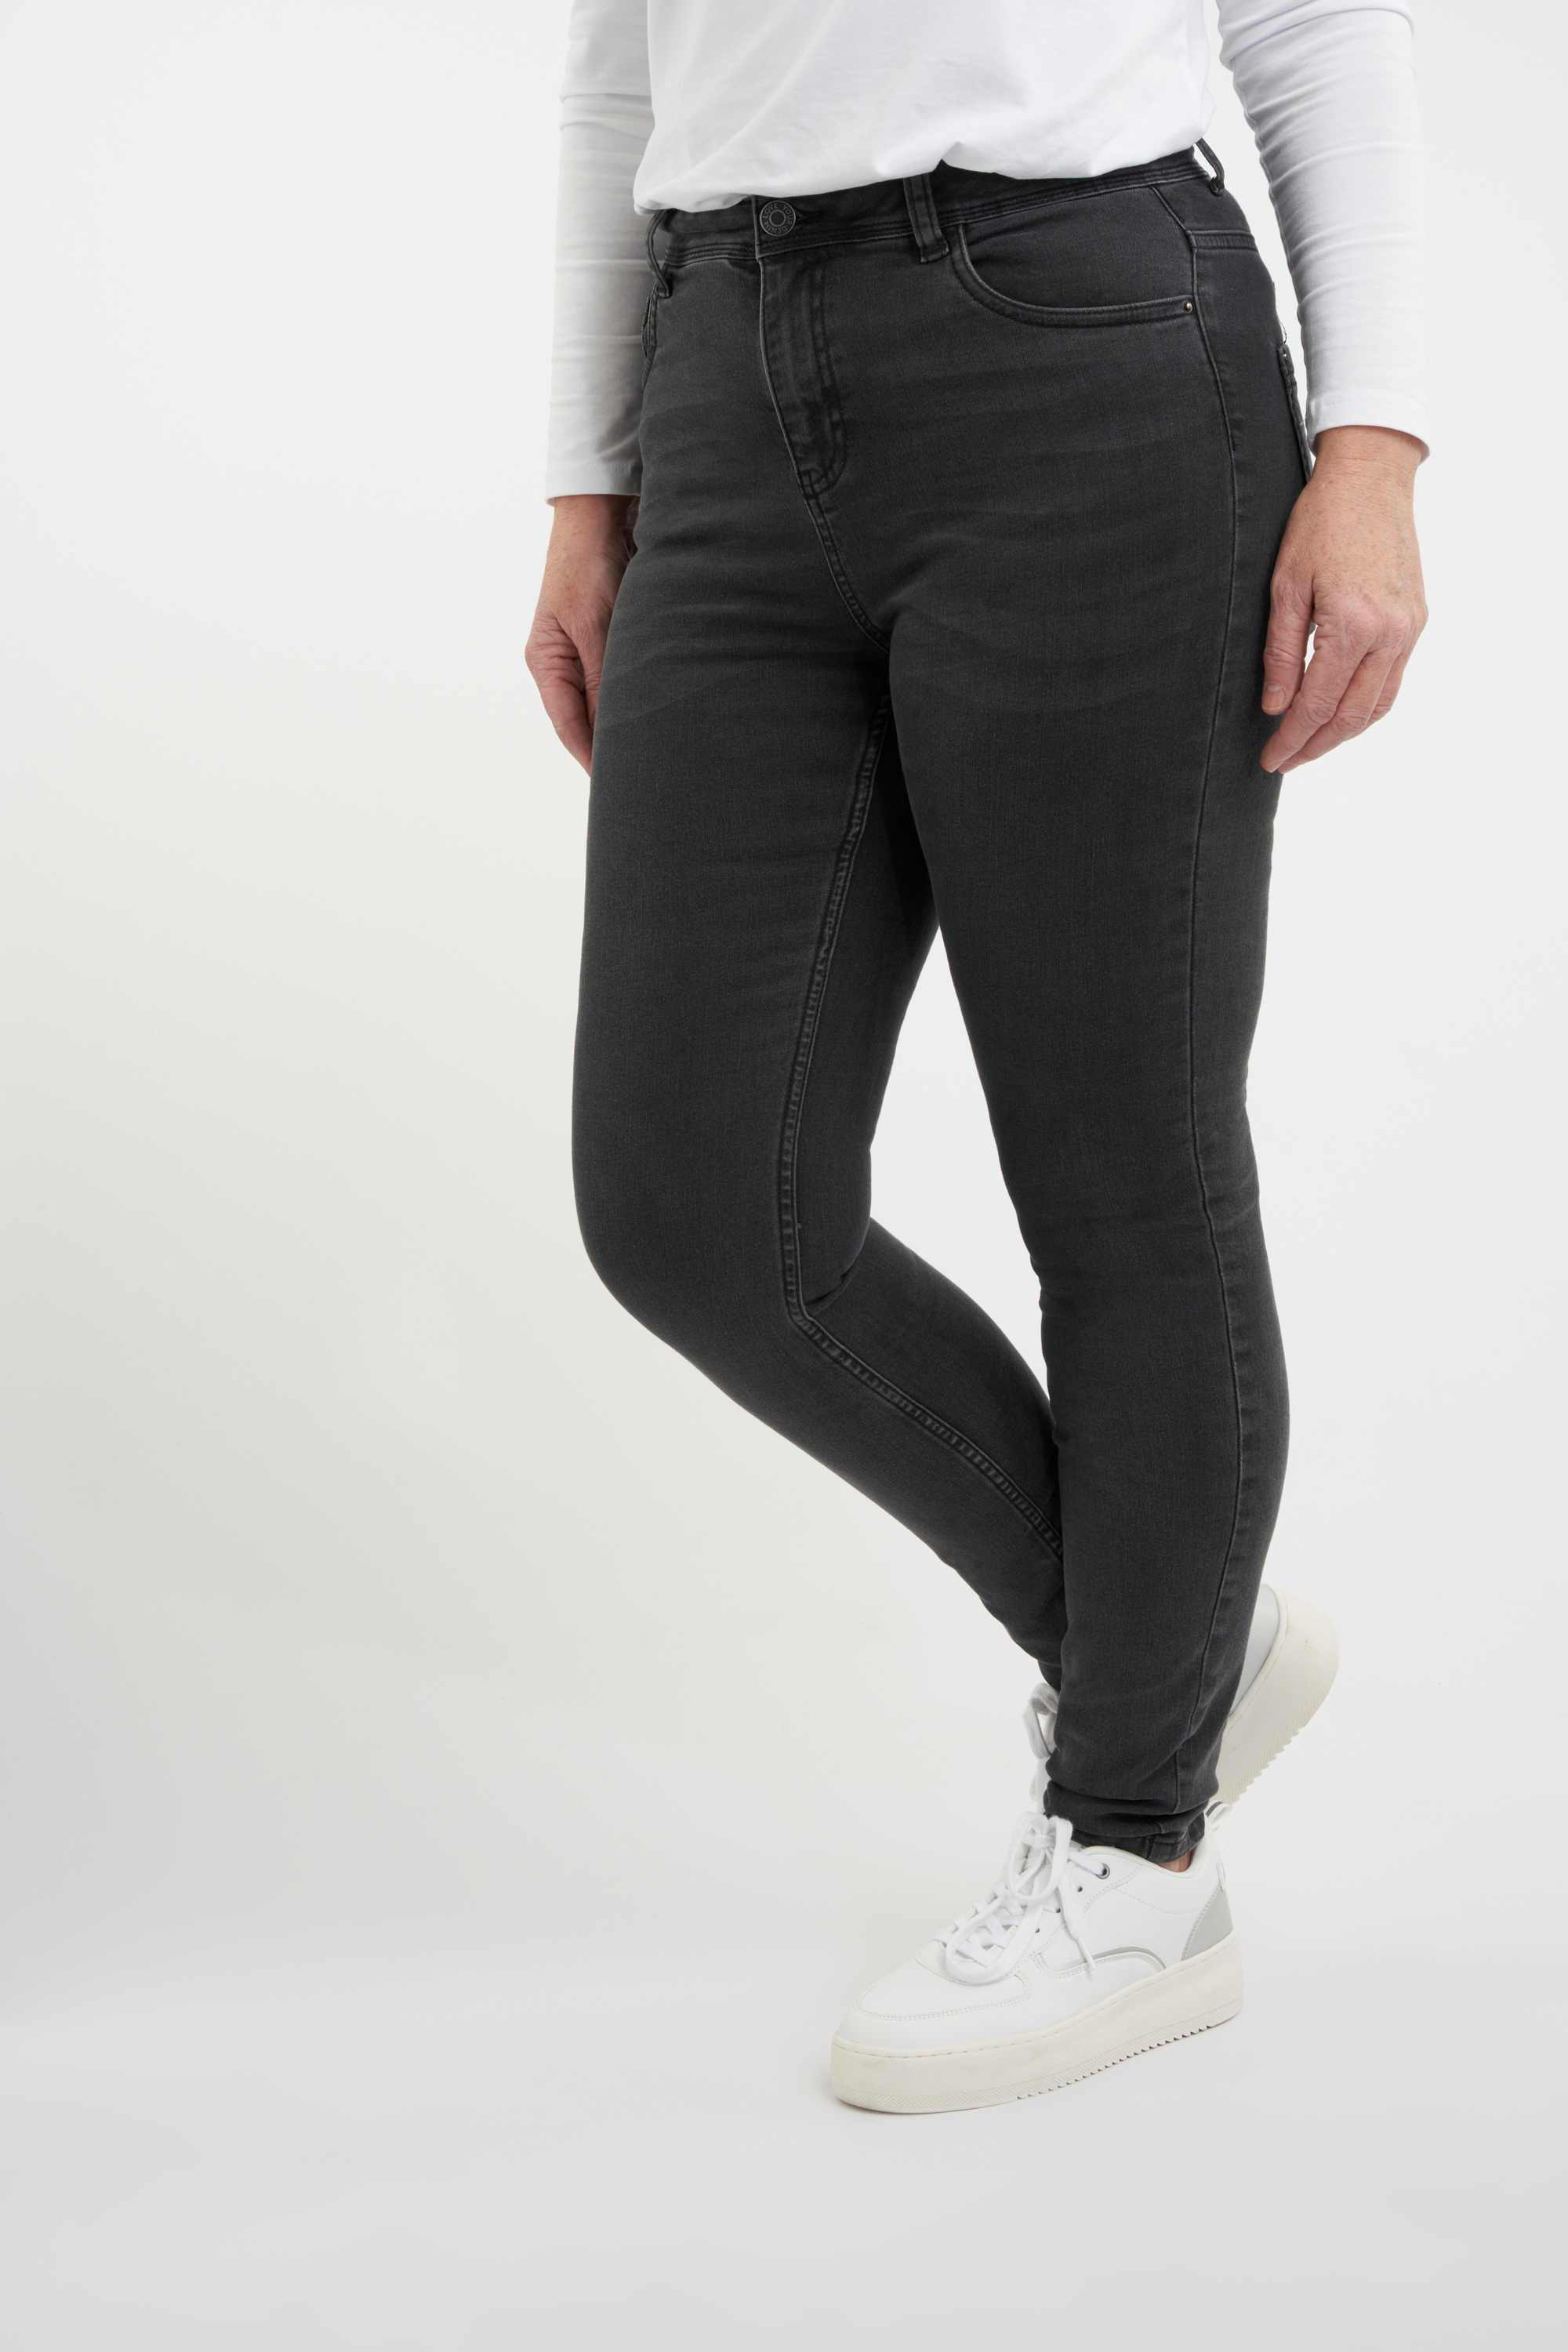 Ik geloof Monografie Bourgeon Dames Skinny leg high waist jeans CHERRY Donker grijs bij MS Mode®